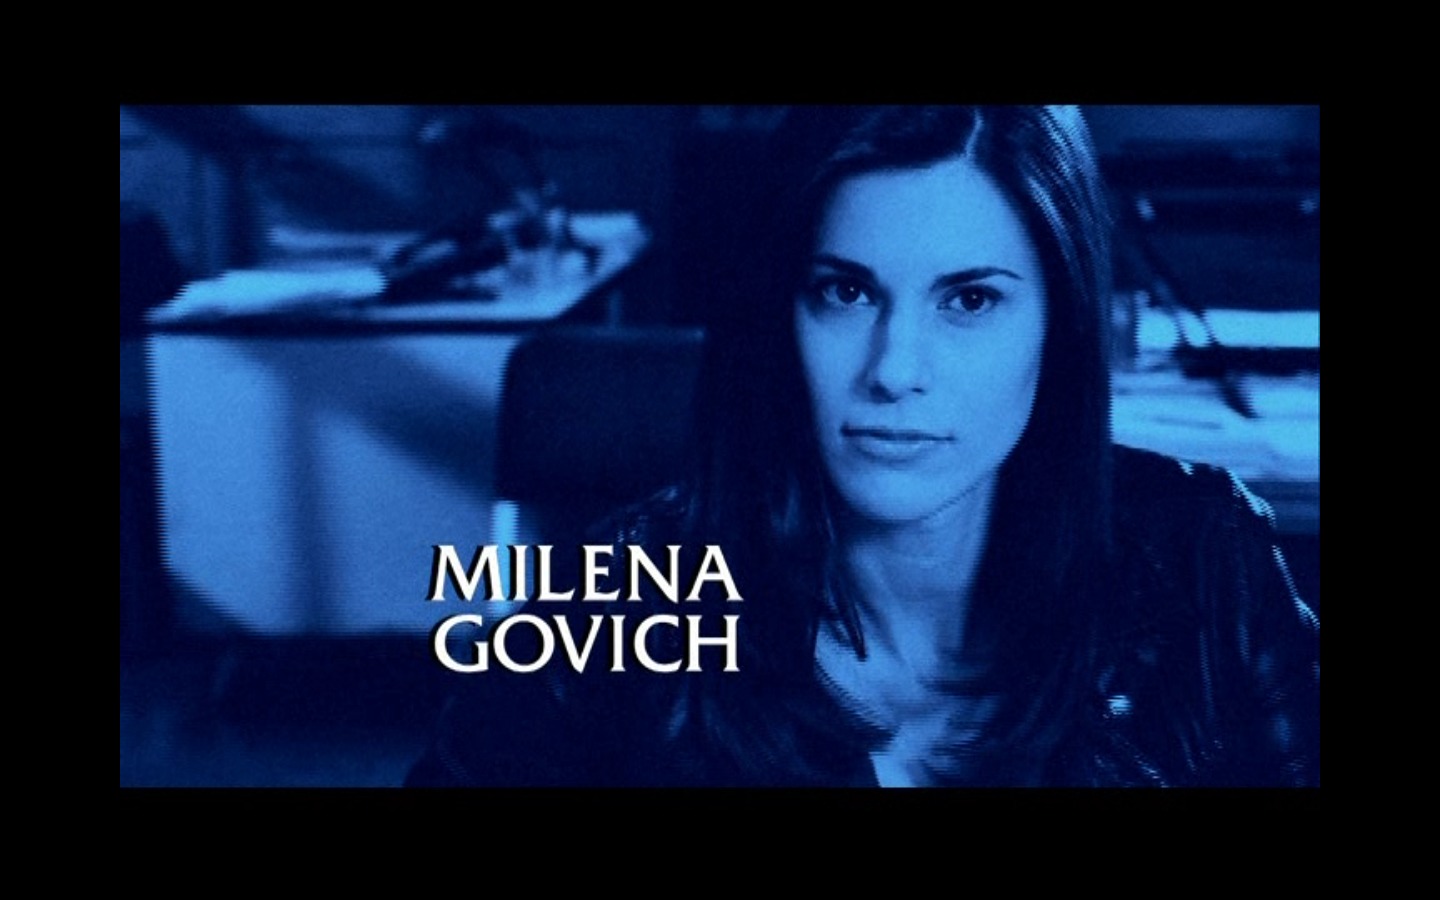 Milena Govich / Law & Order opening credits